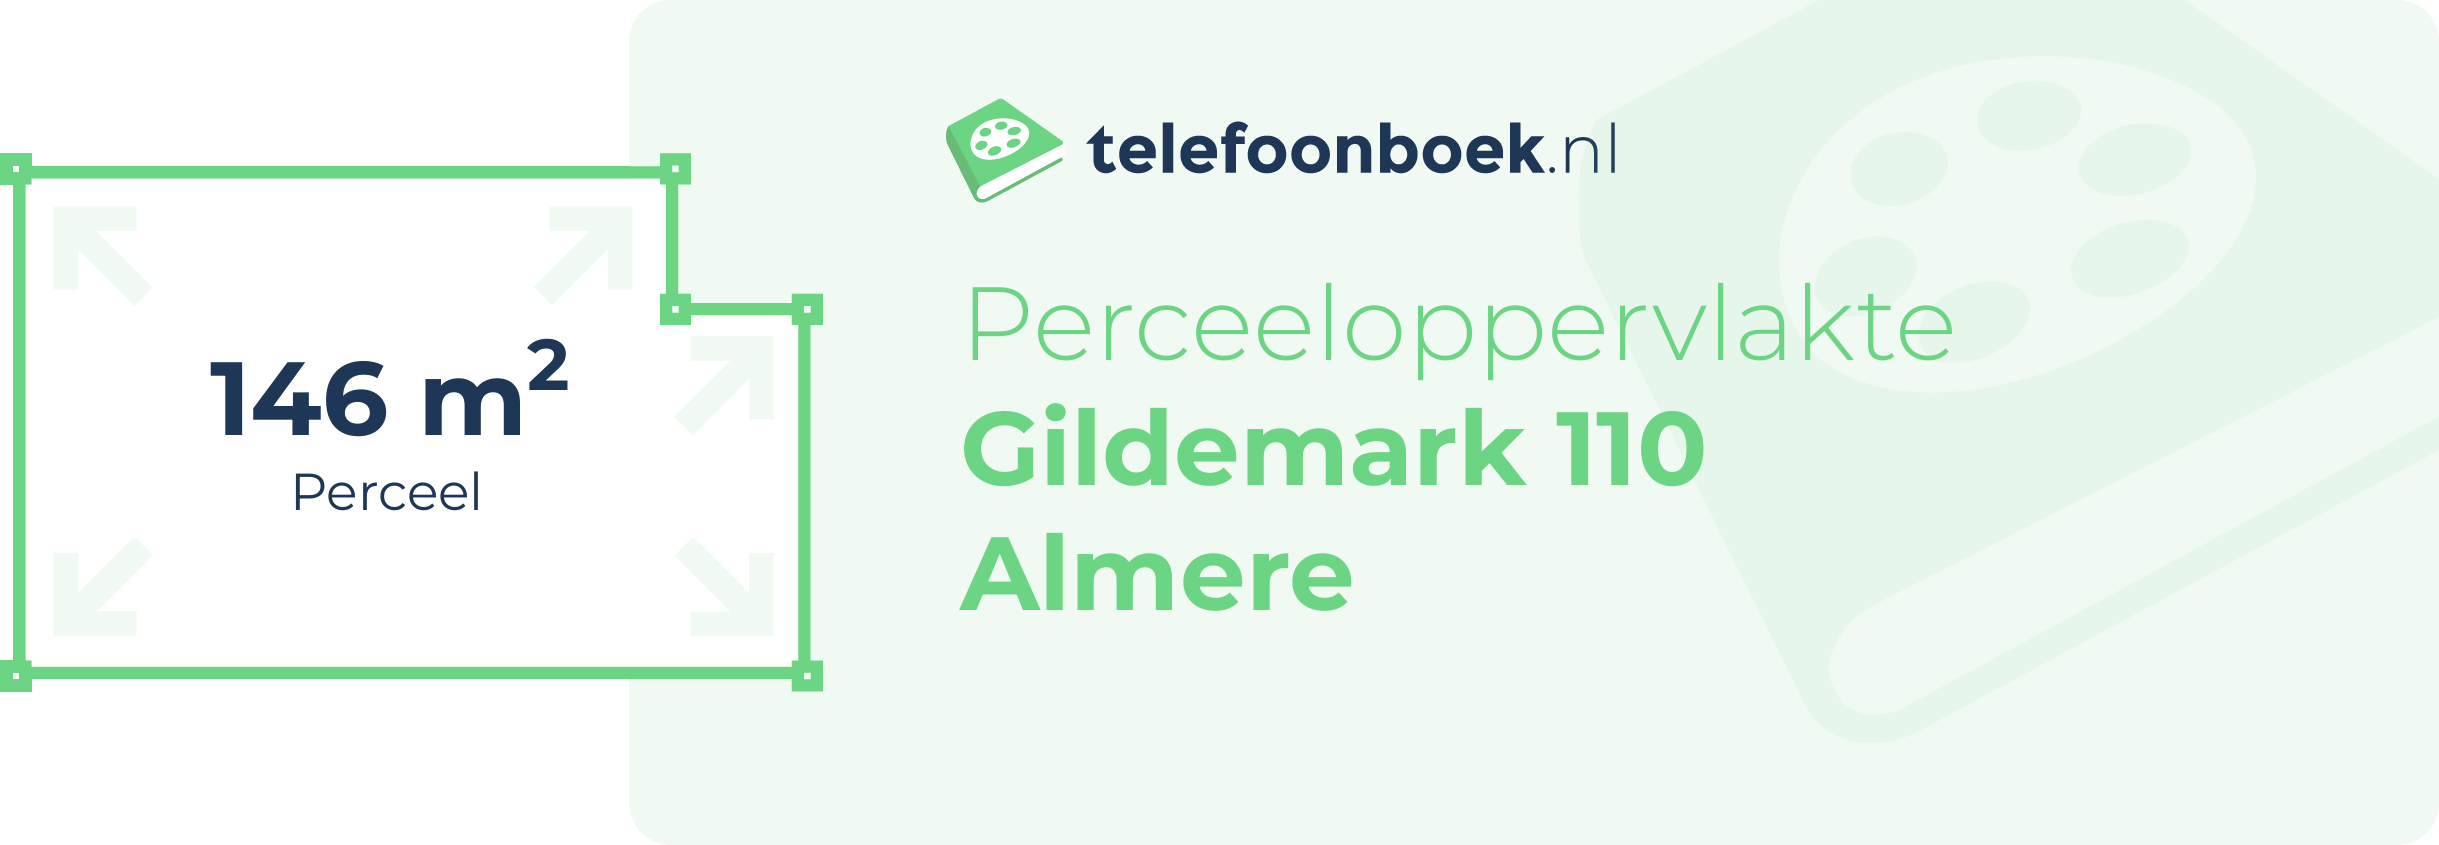 Perceeloppervlakte Gildemark 110 Almere